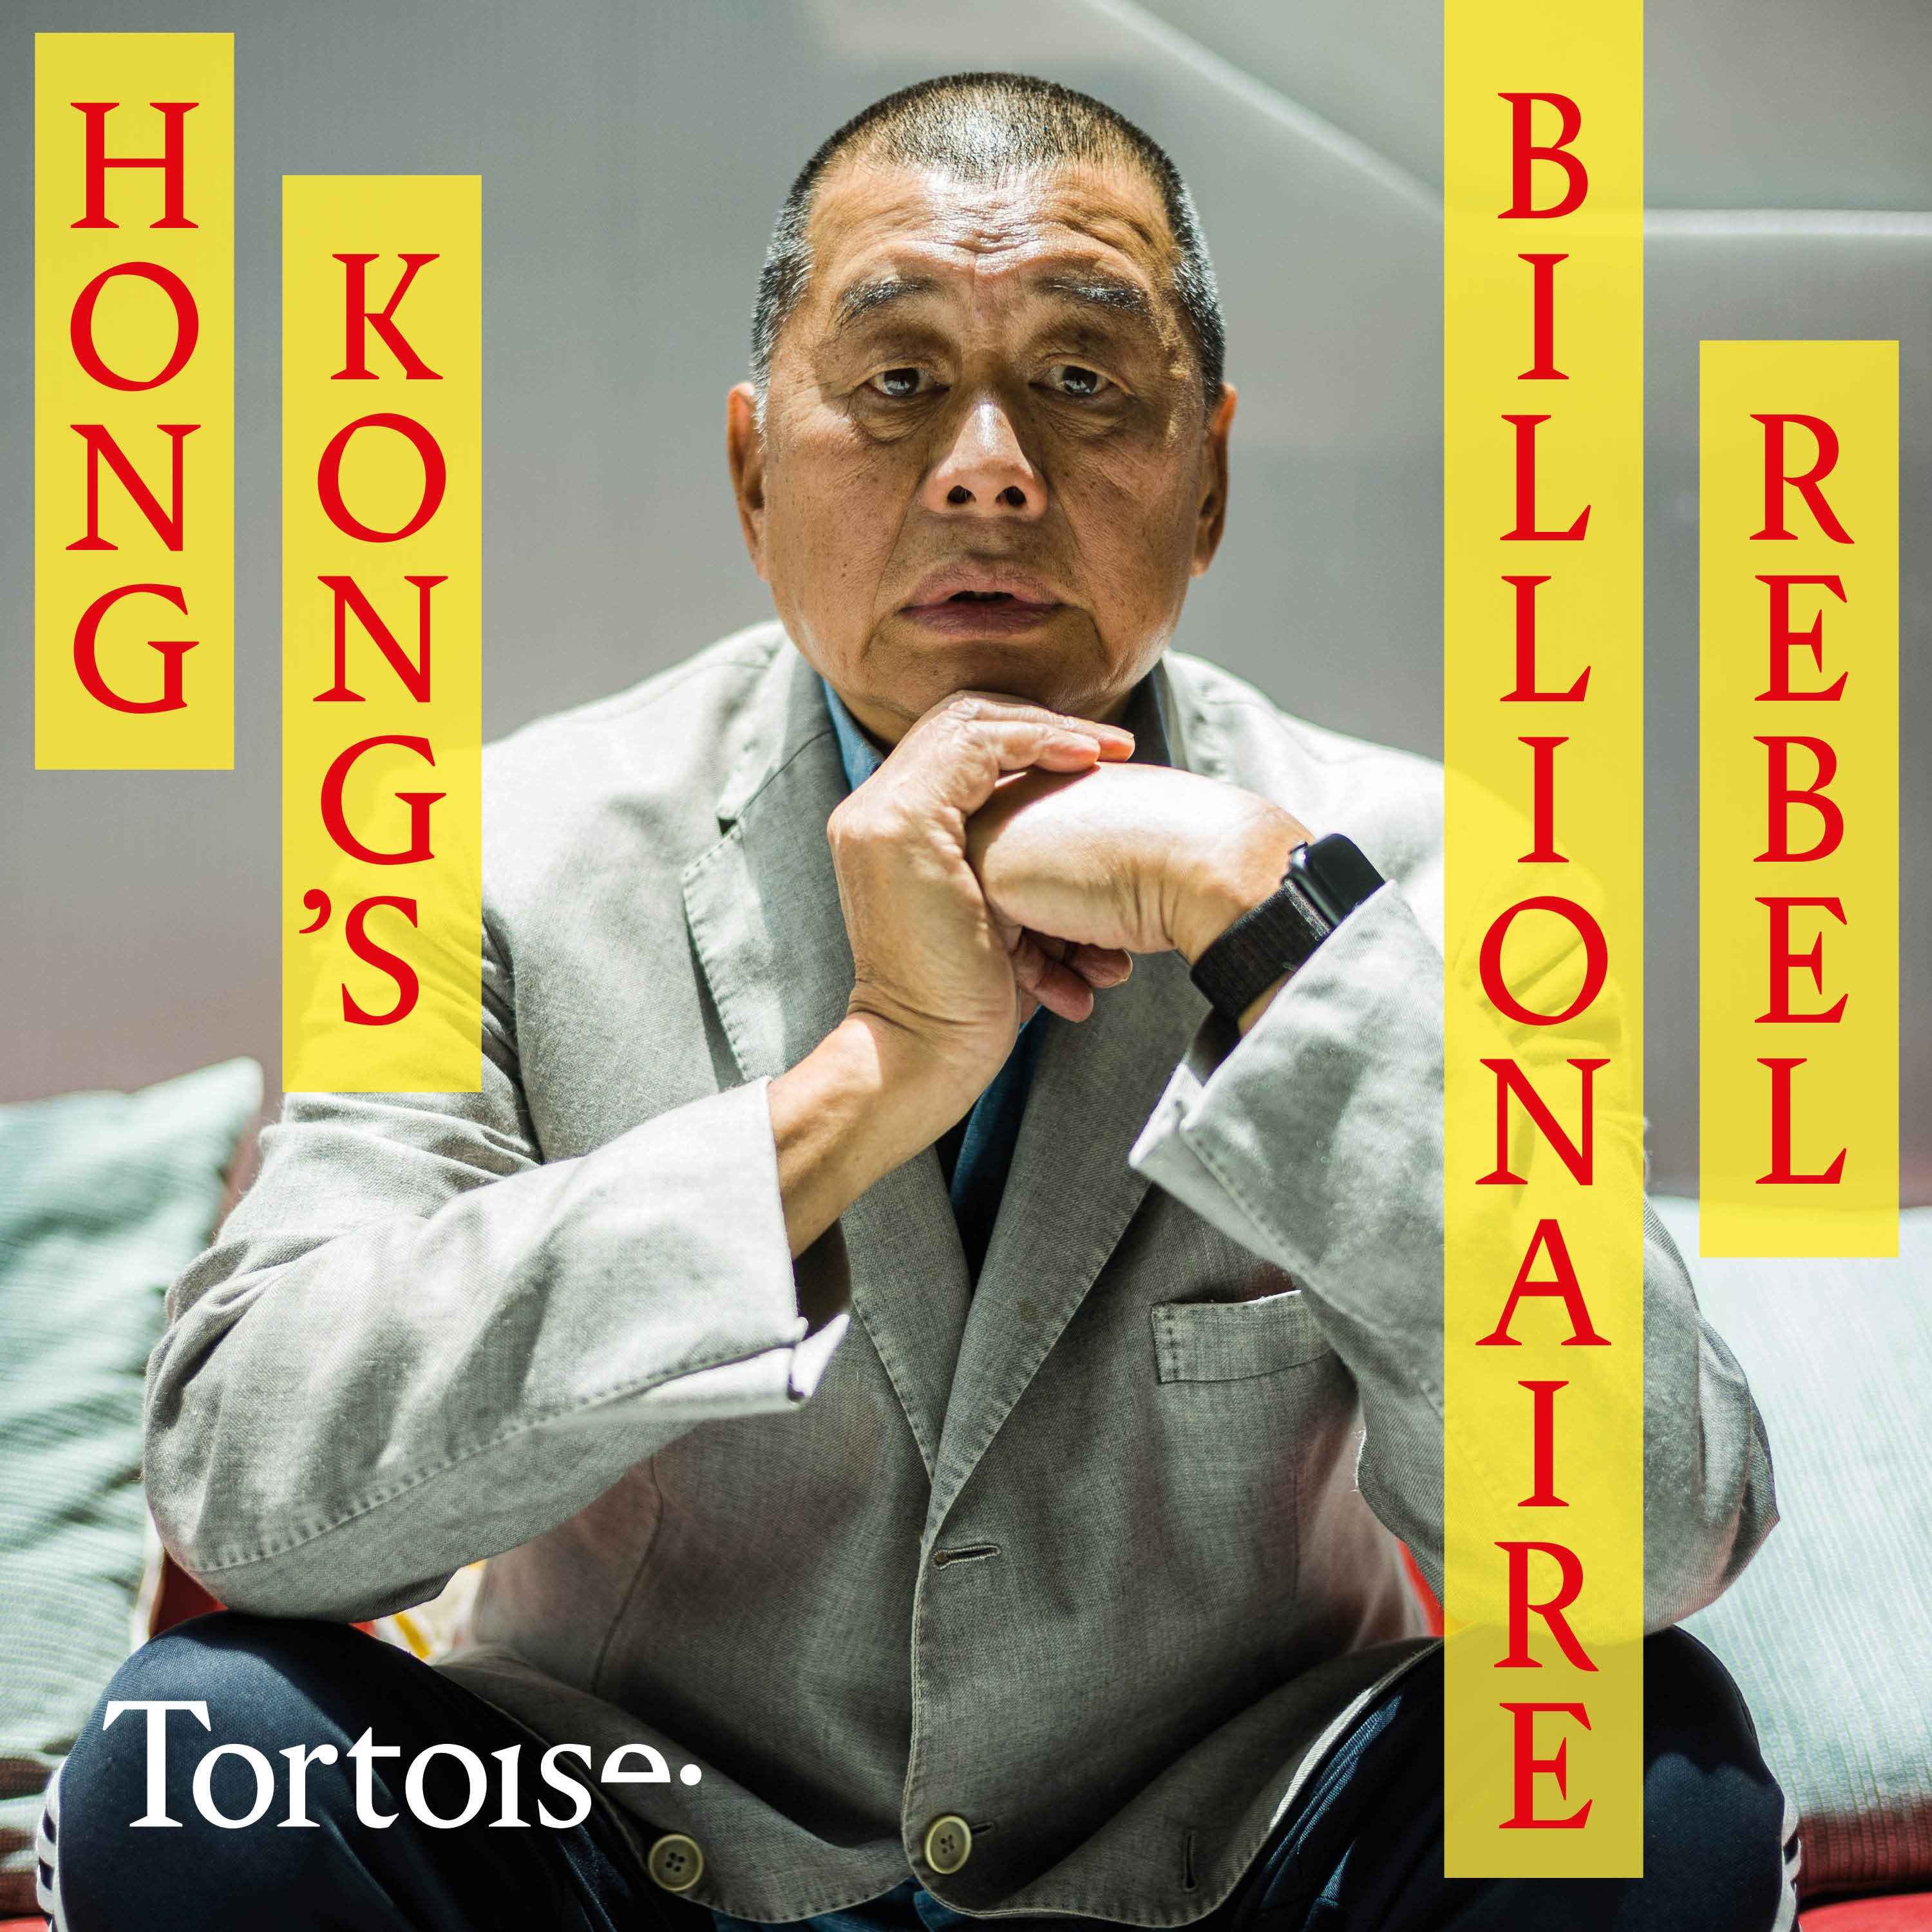 Hong Kong’s billionaire rebel